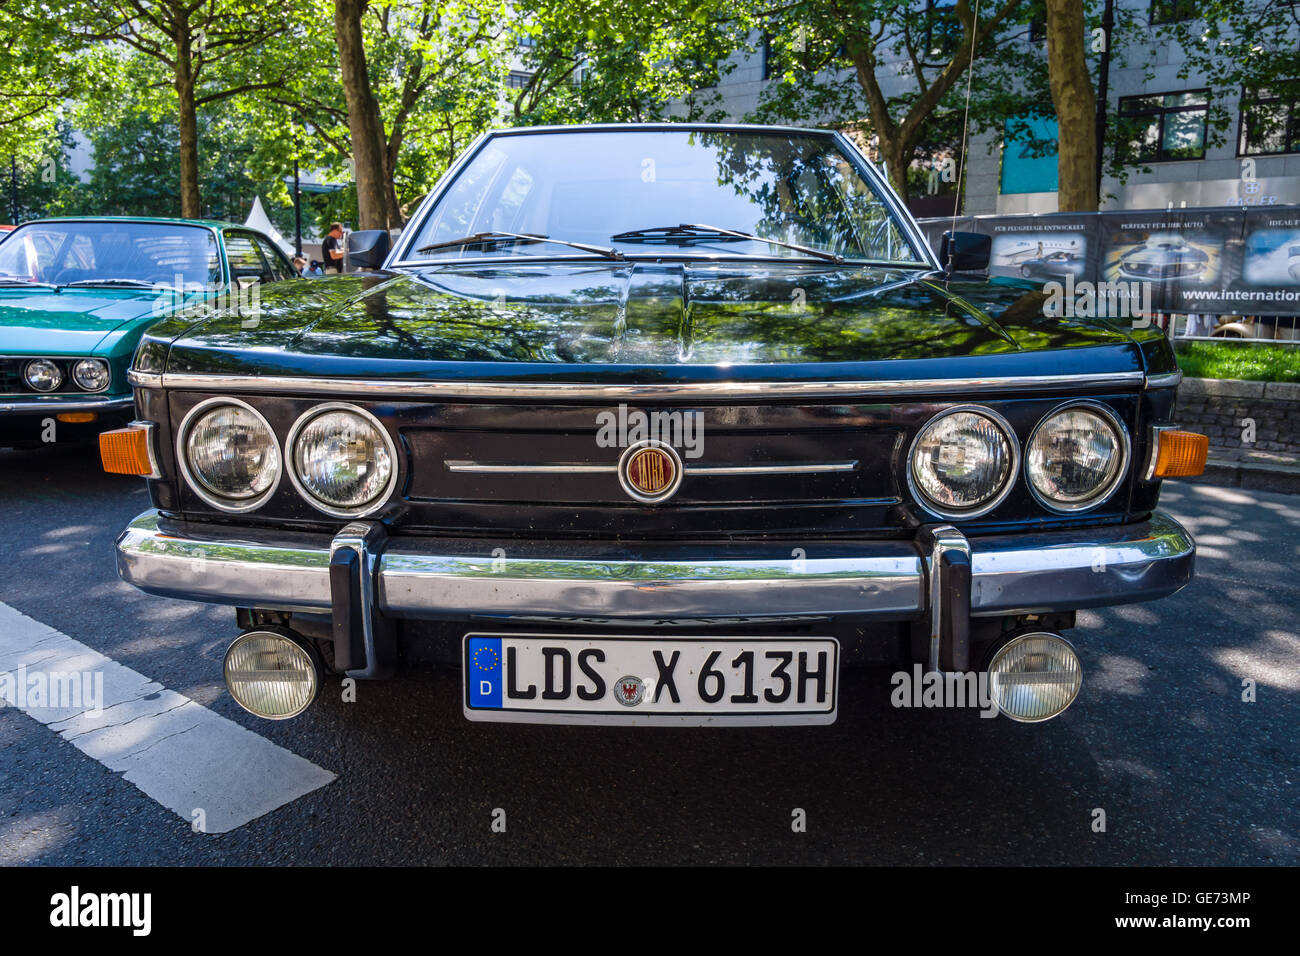 BERLIN - Juin 05, 2016 : voiture de luxe pleine grandeur 613 Tatra. Les Classic Days Berlin 2016. Banque D'Images